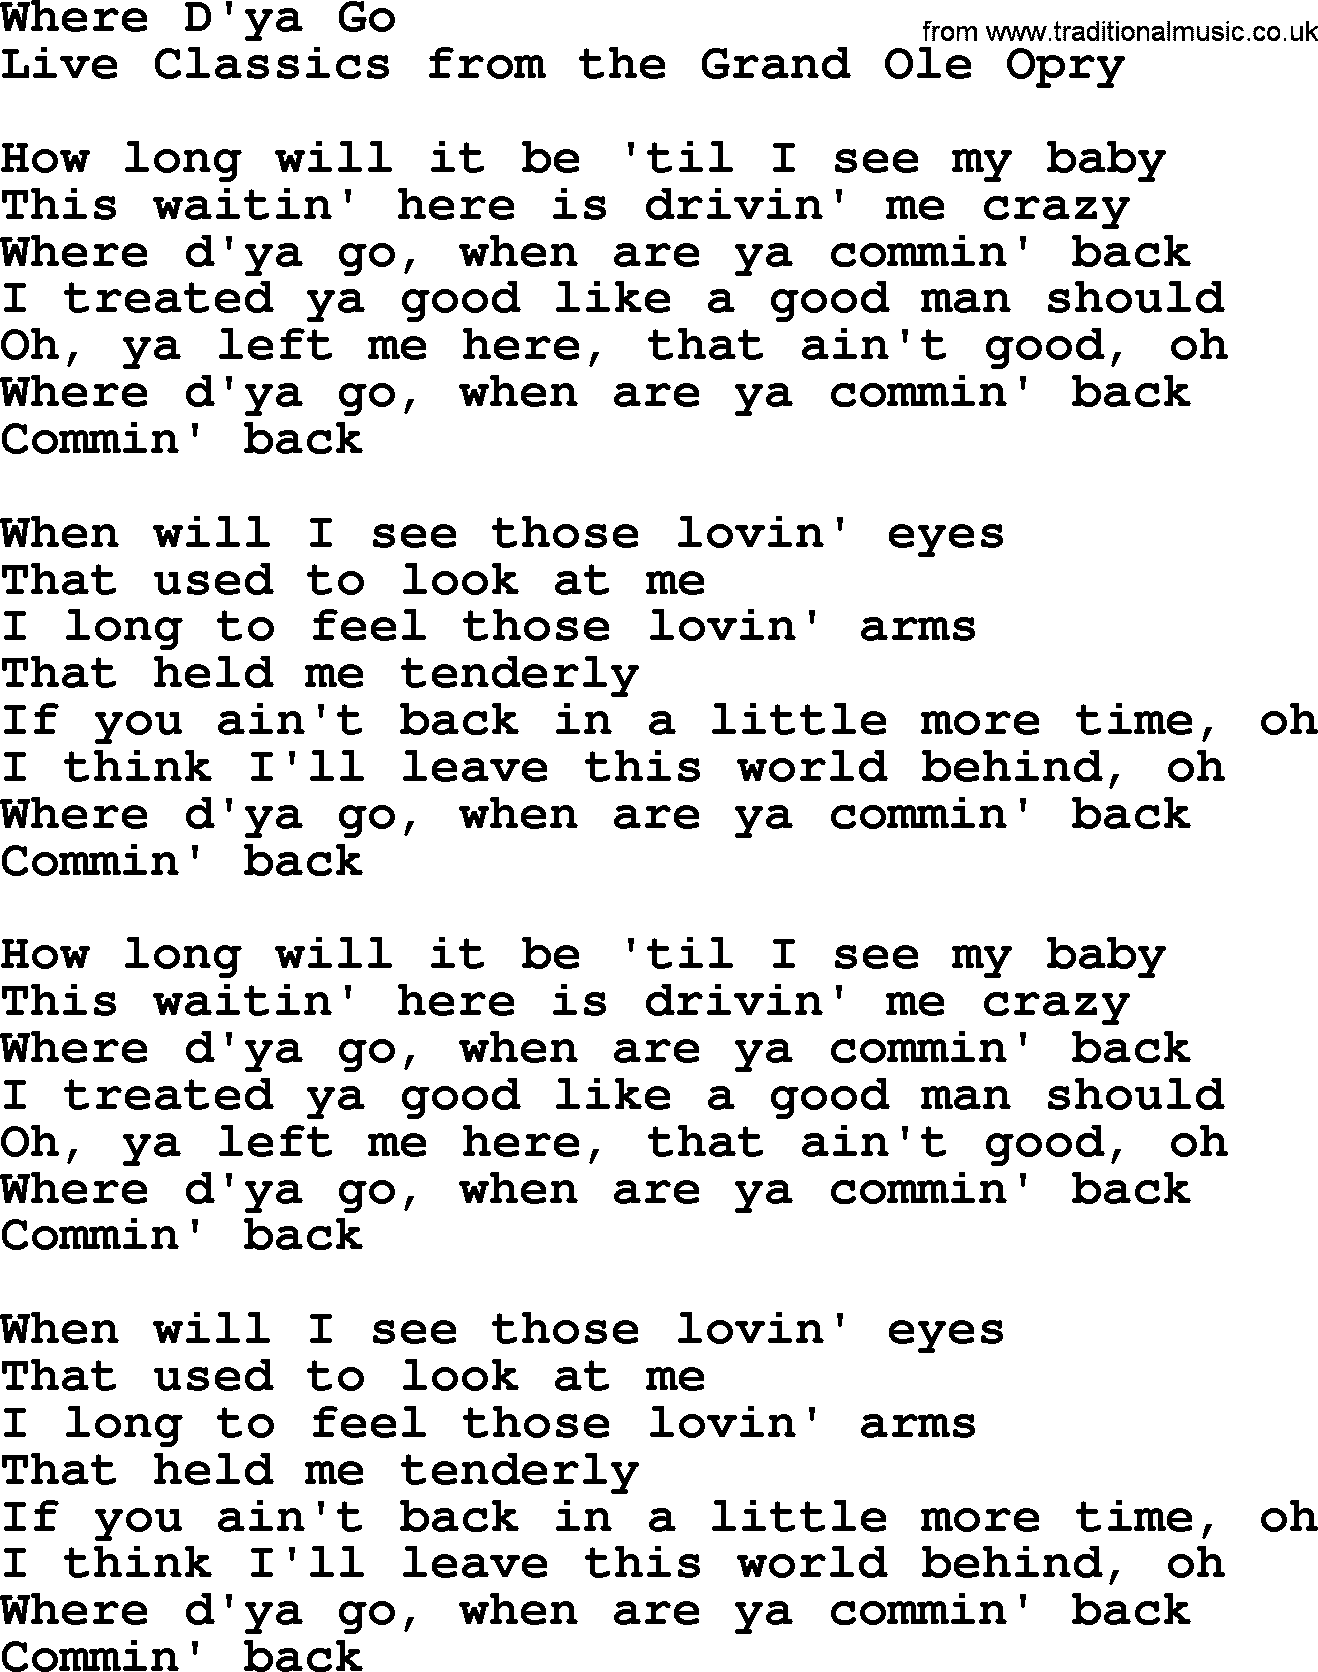 Marty Robbins song: Where Dya Go, lyrics